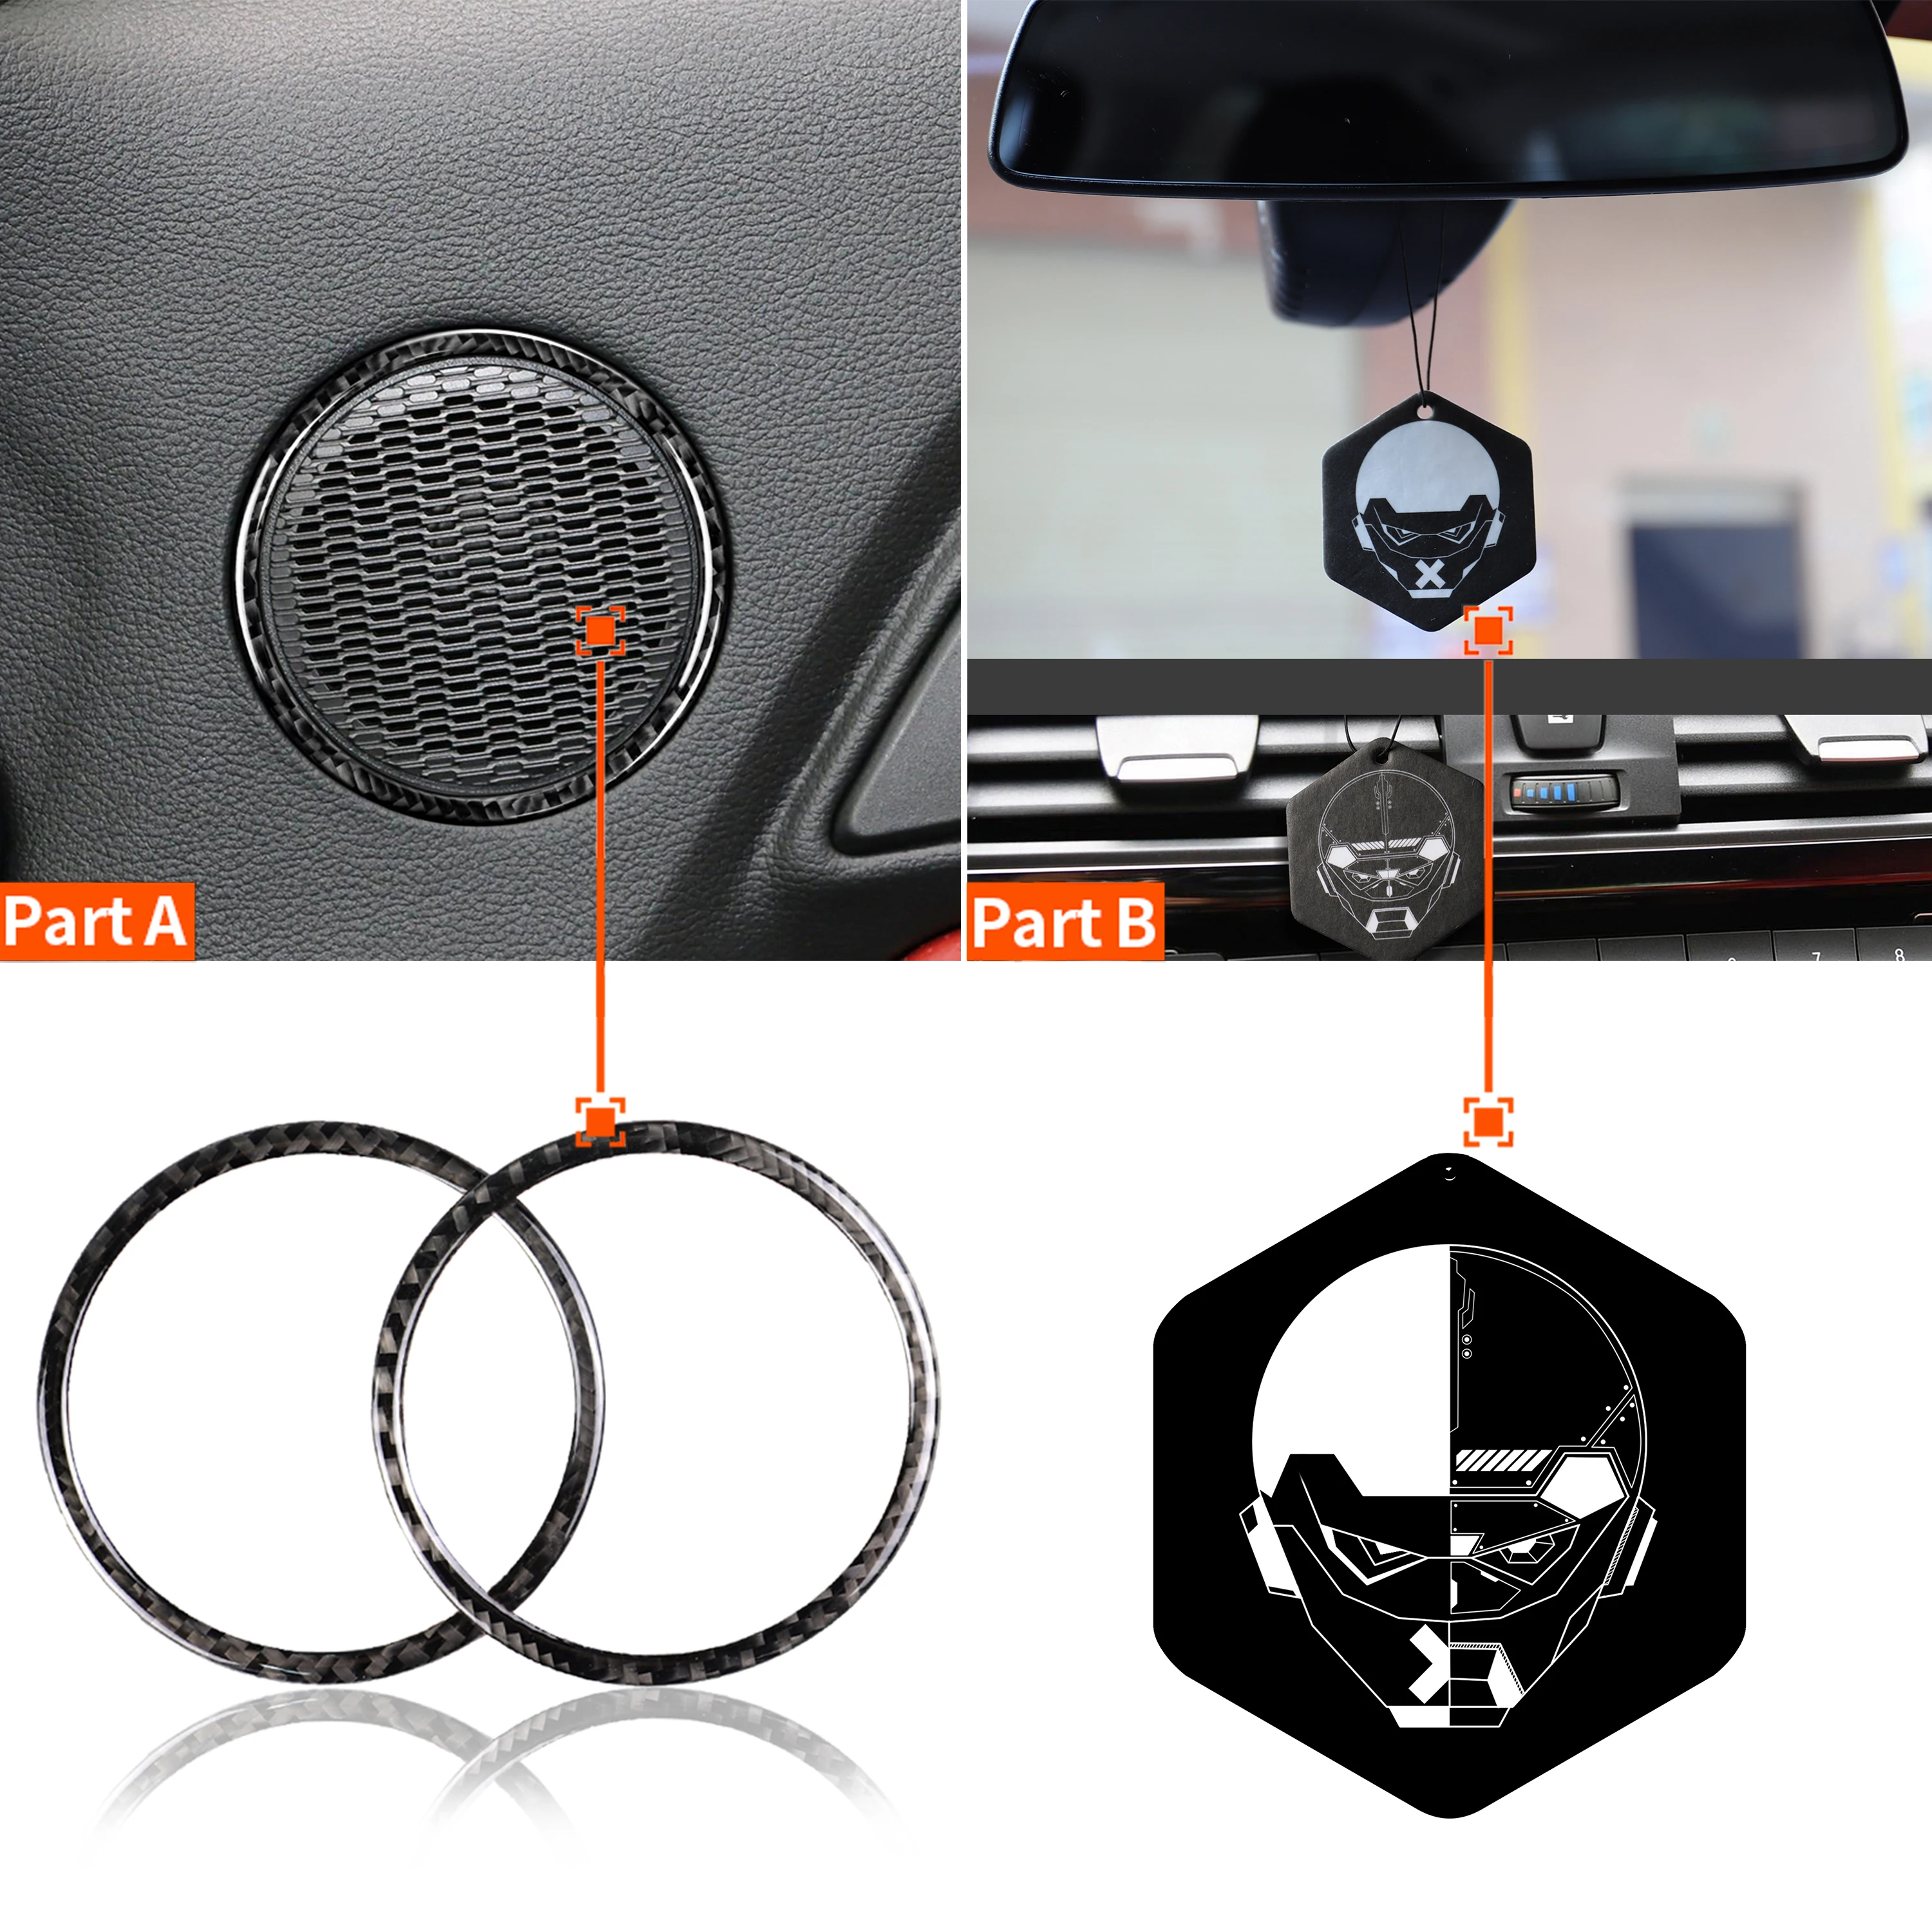 Mttilauso 2PCS Carbon Fiber Car Door Speaker Ring Interior Trim Cover Sticker Accessories Compatible for Ford Mustang 2015 2016 2017 2018 2019 2020 Black